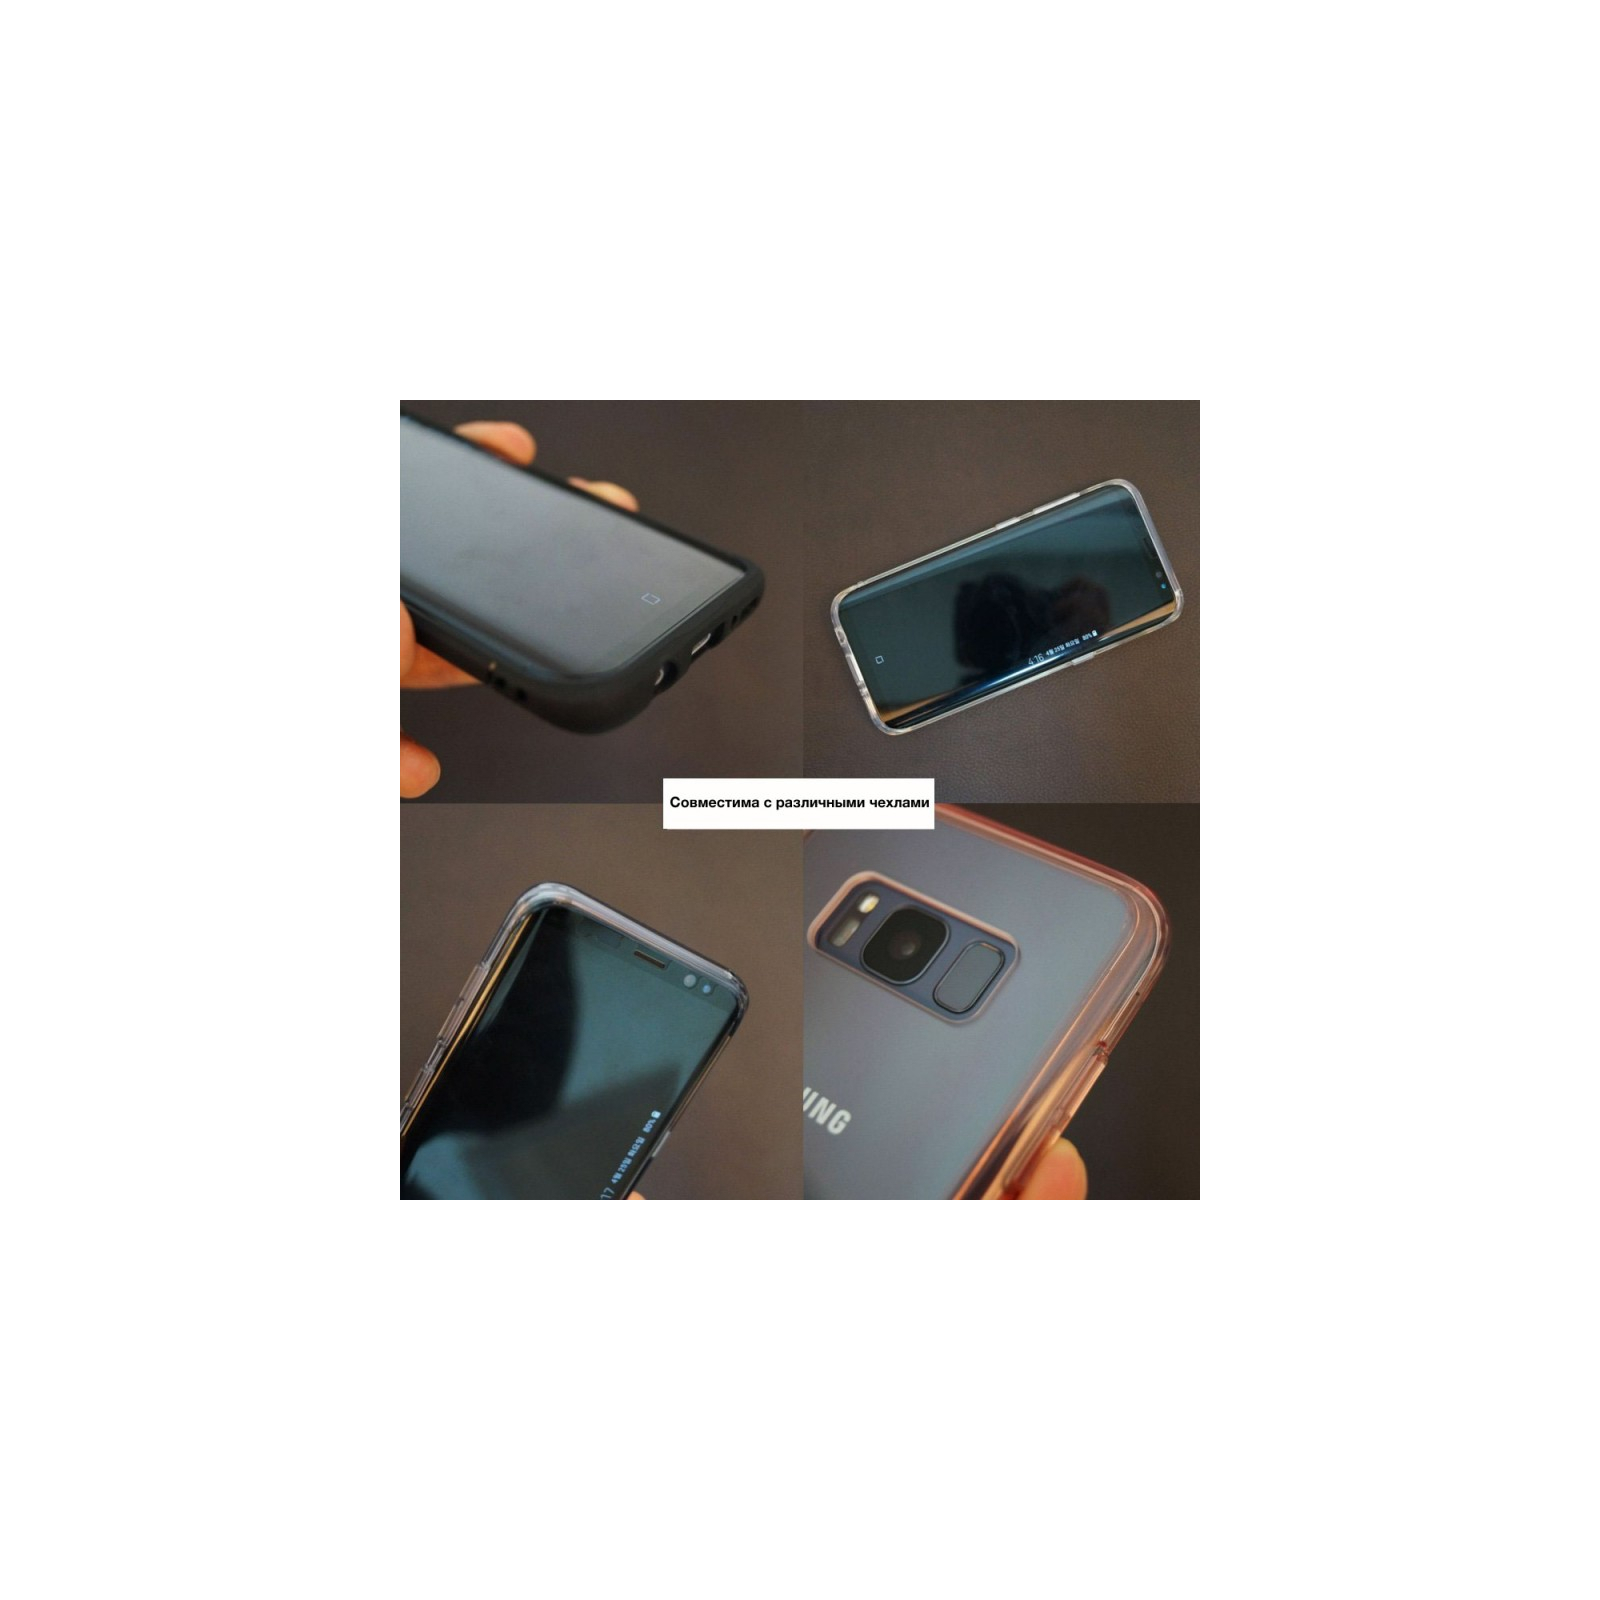 Пленка защитная Ringke для телефона Samsung Galaxy S8 Full Cover (RSP4324) изображение 6